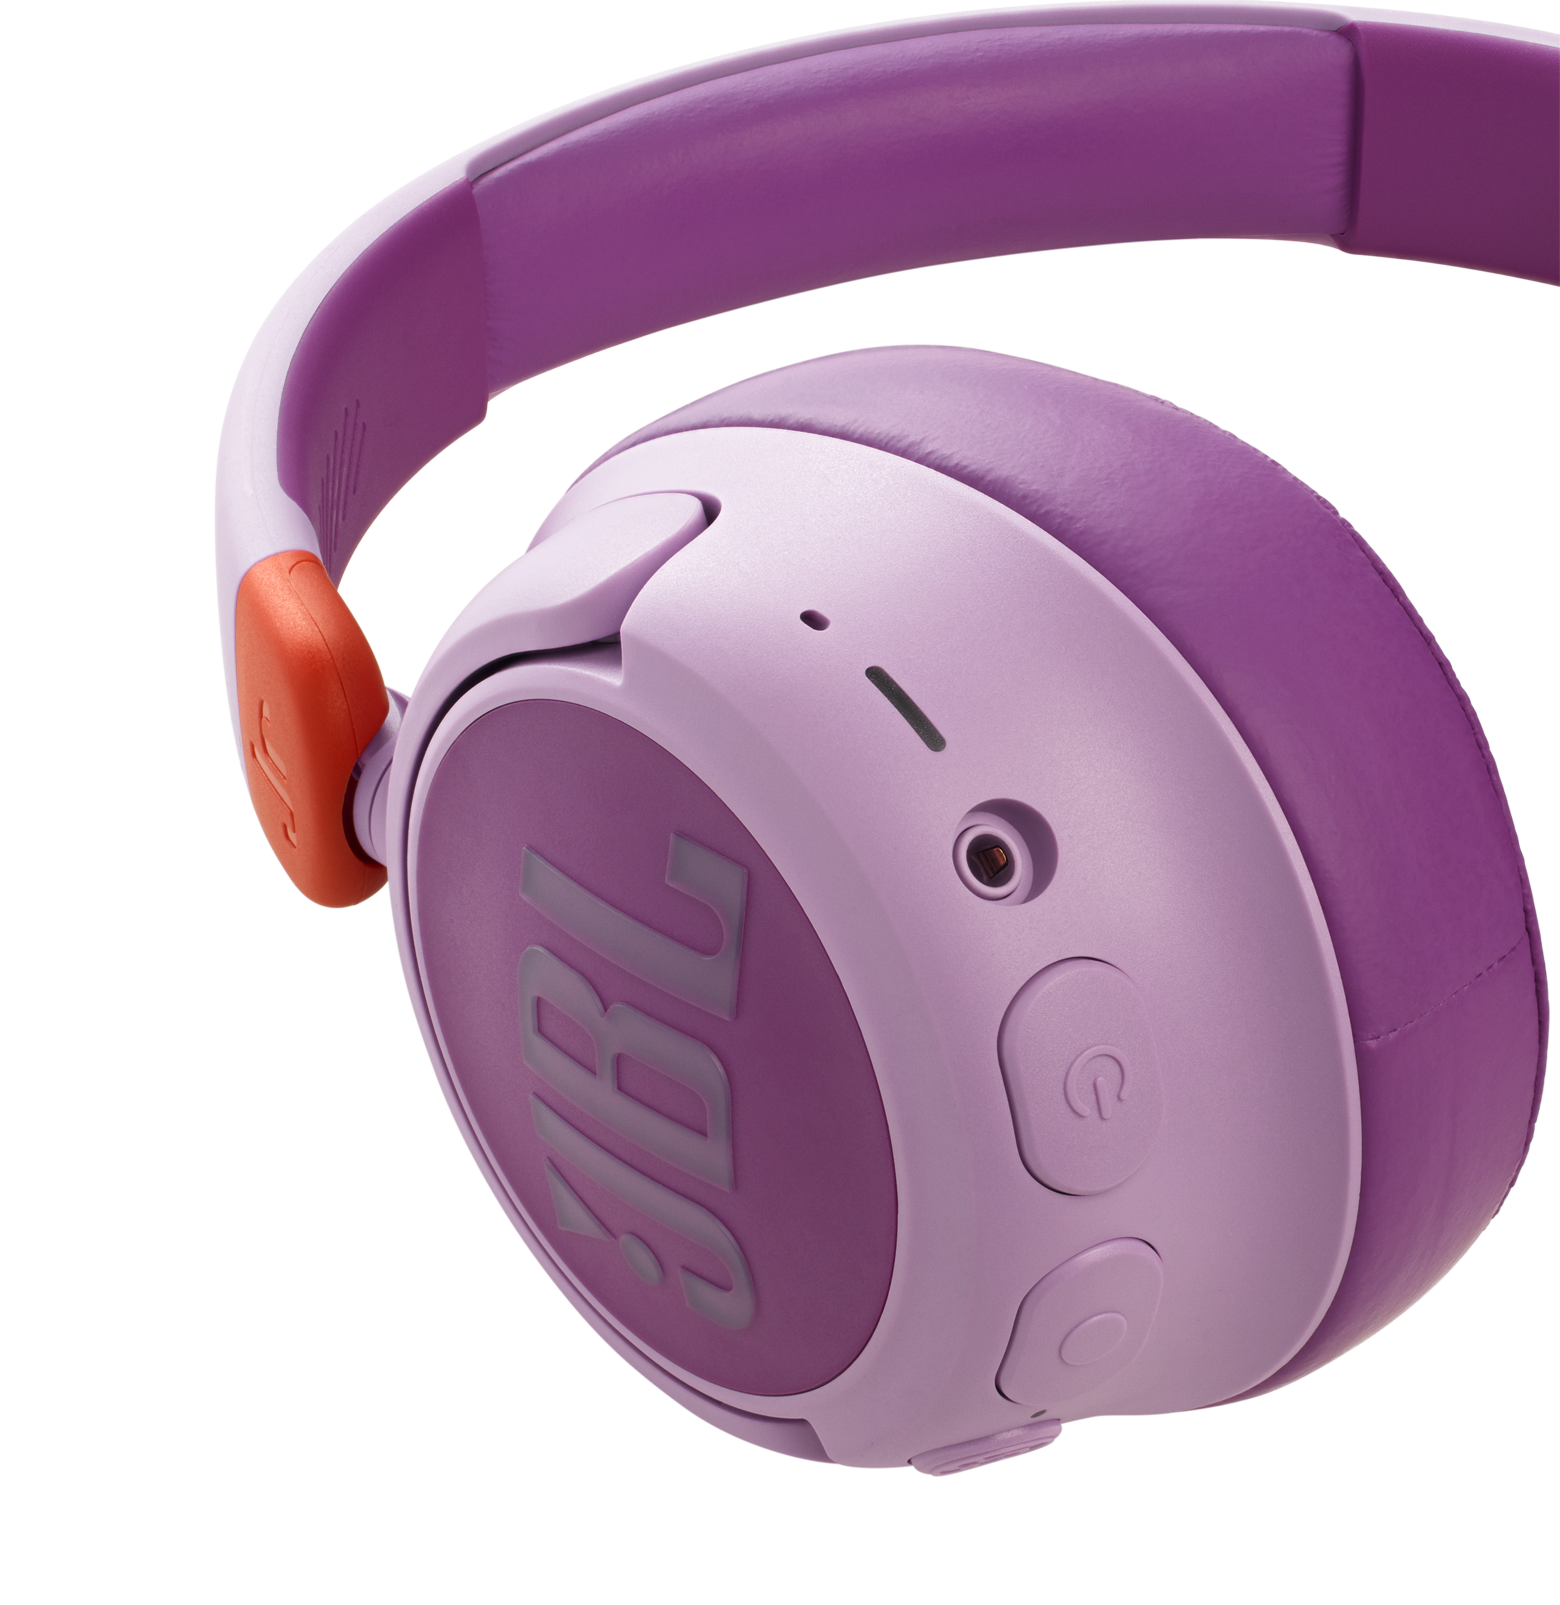 JBL JR 460NC - Pink - Wireless over-ear Noise Cancelling kids headphones - Detailshot 1